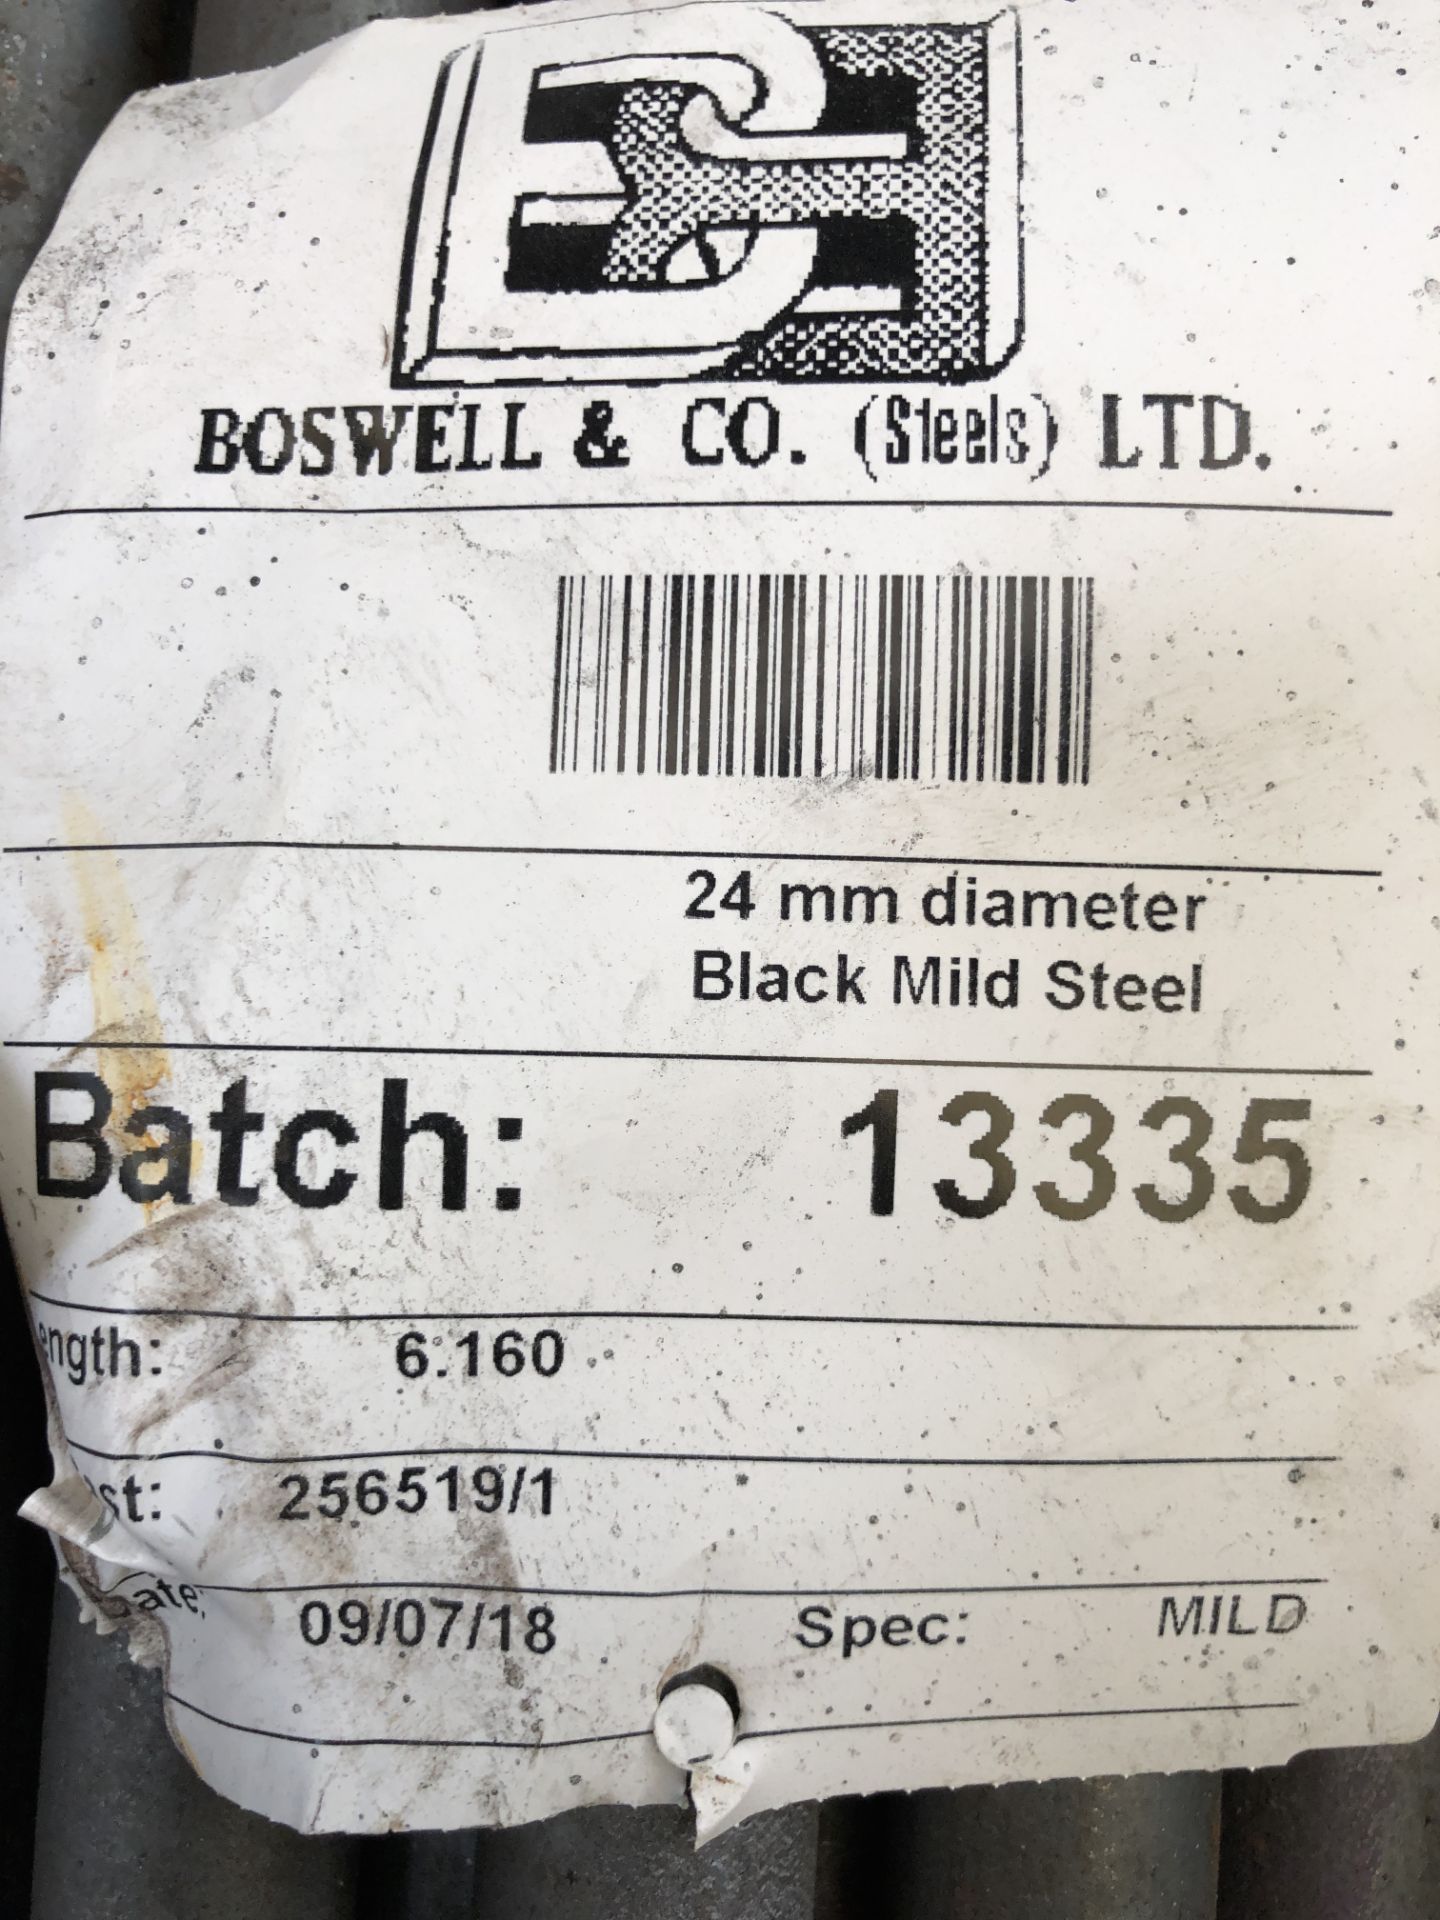 Bundle of - Batch 13335 - 24mm Diameter Black Mild Steel Rods, Length 6.160, Cast 256519/1 date 09/